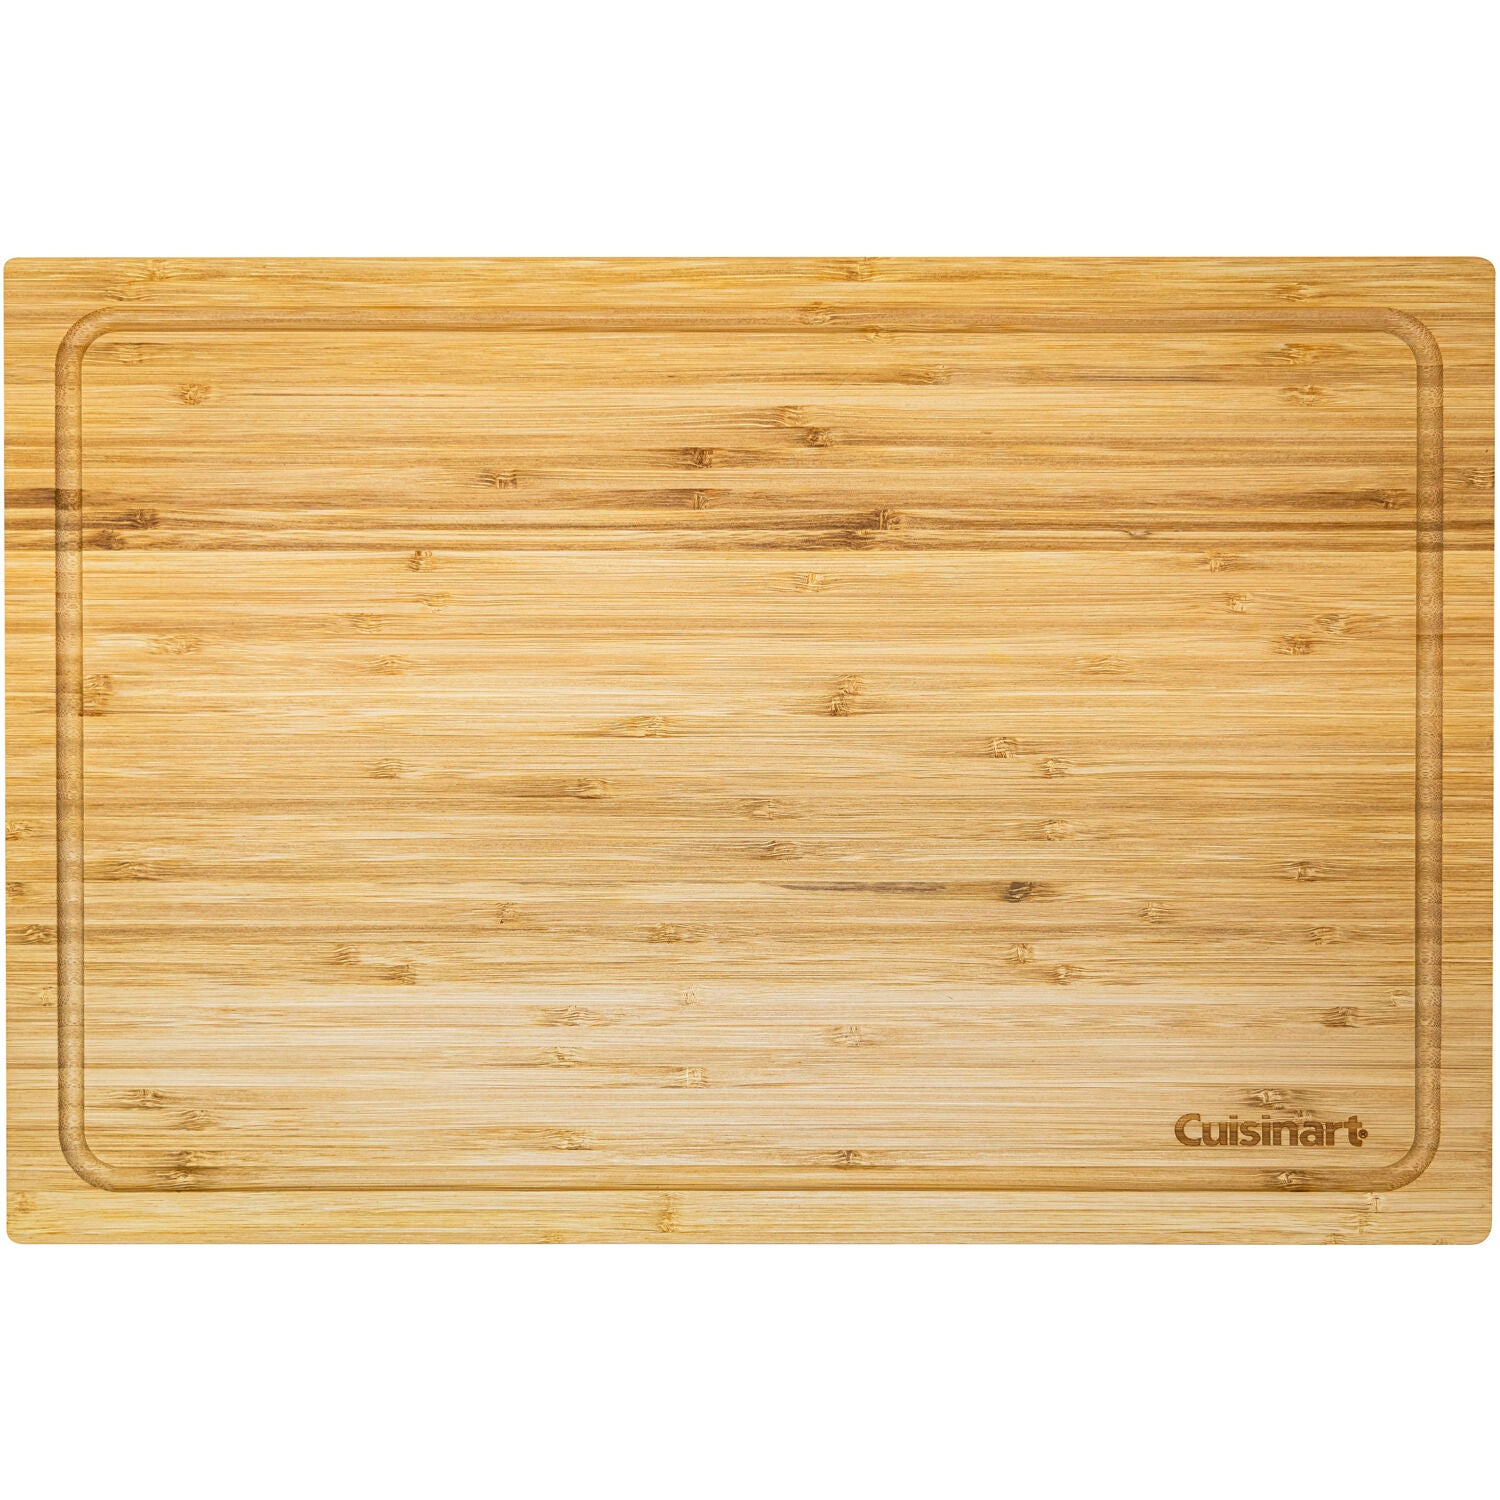 Bamboo Cutting Board with Hidden Tray